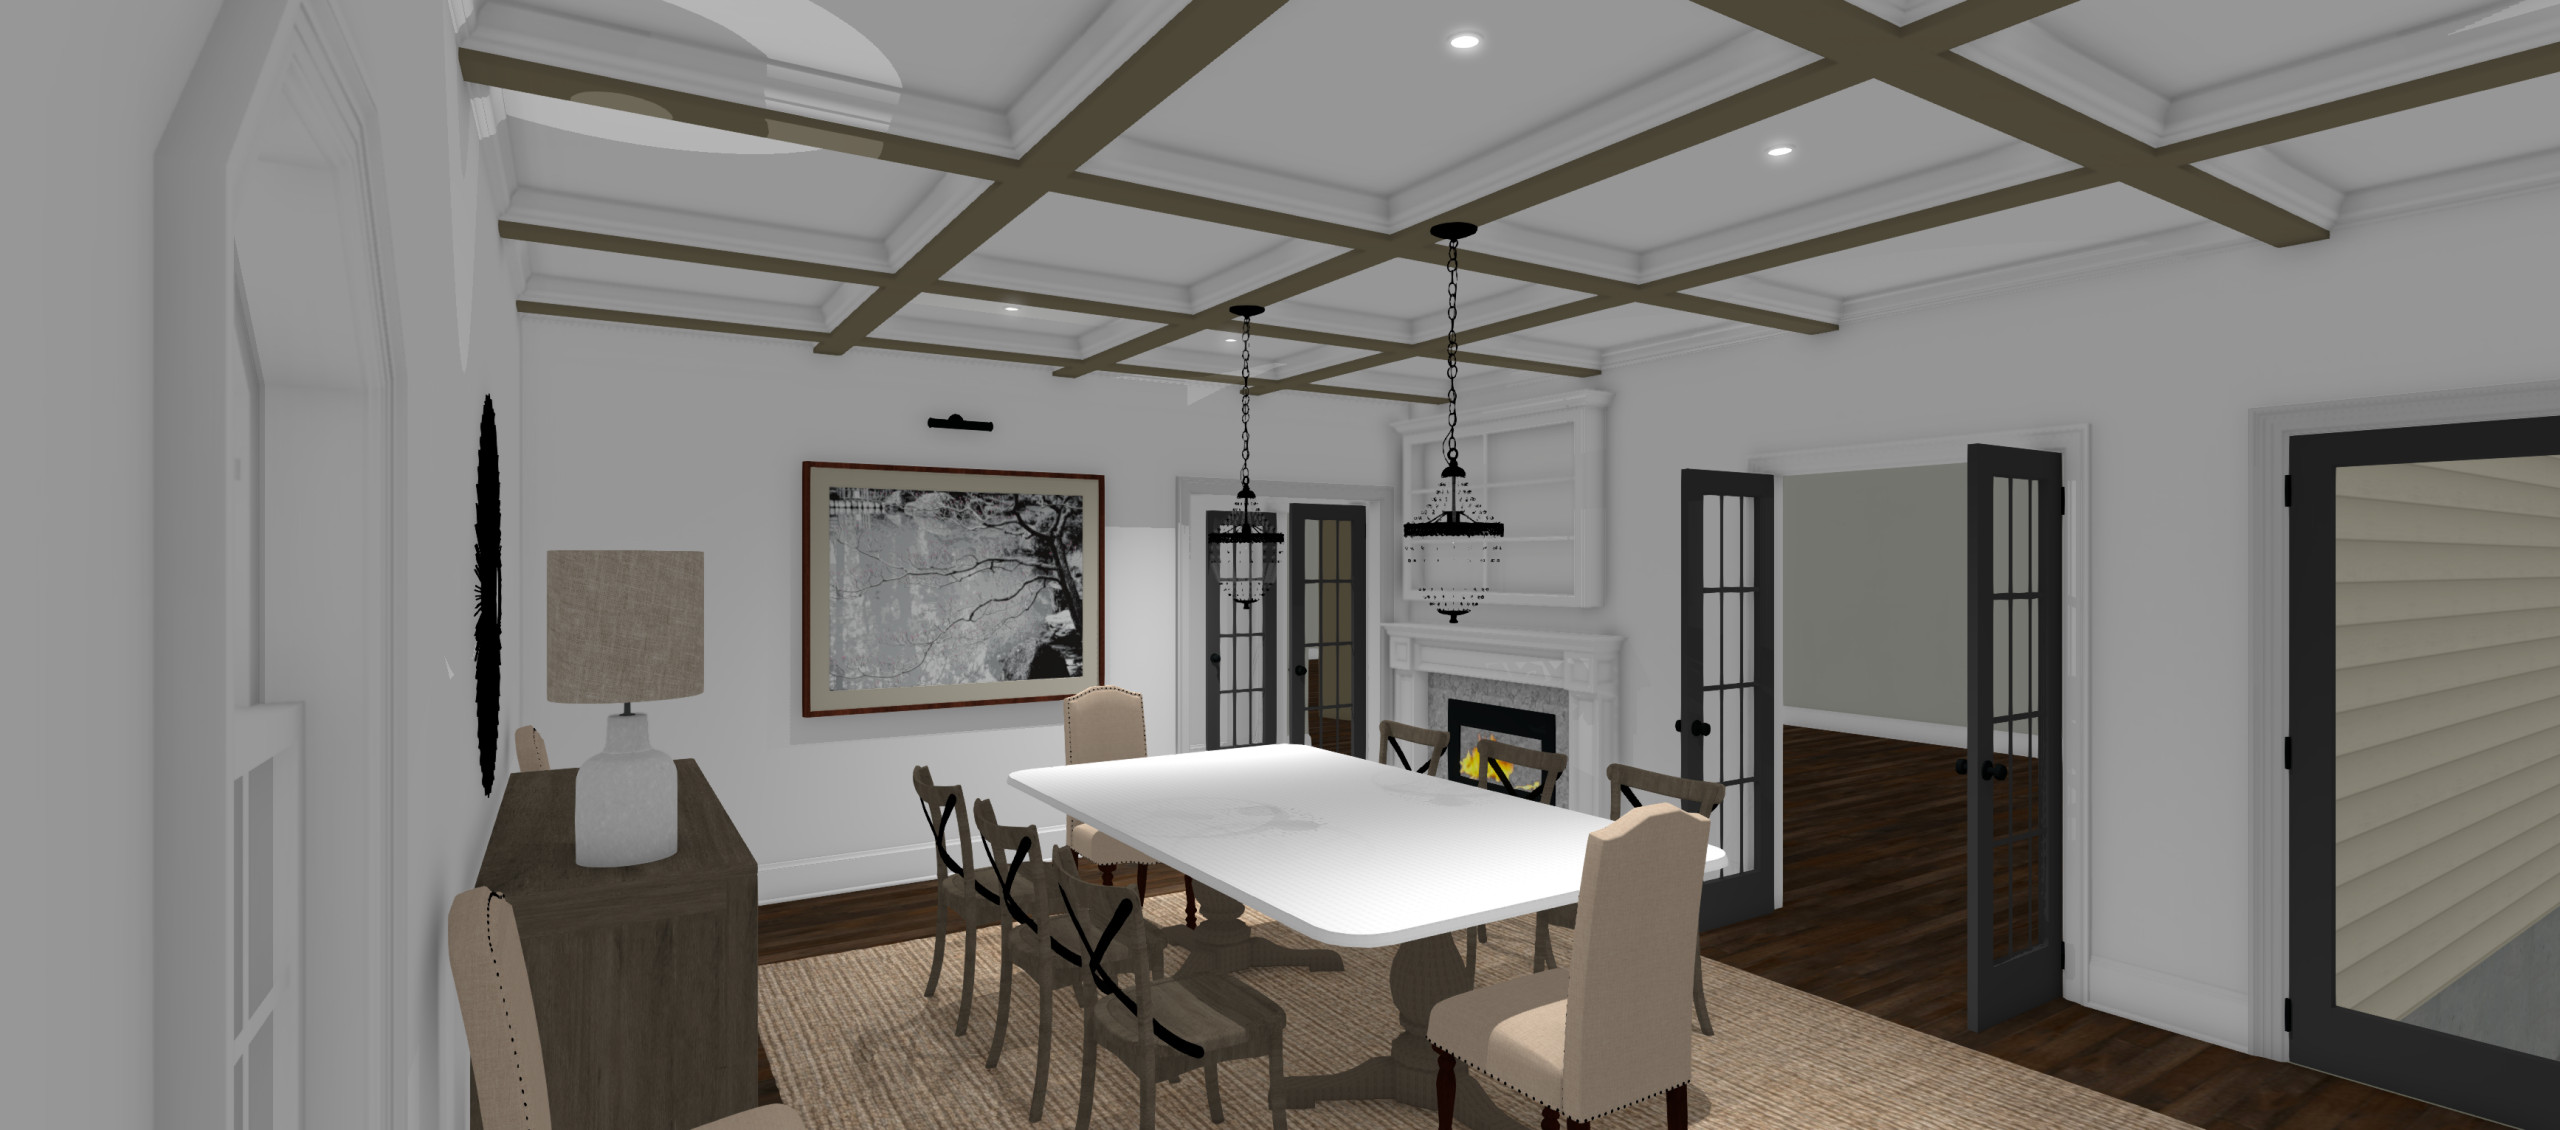 Conceptual Dining Room Design